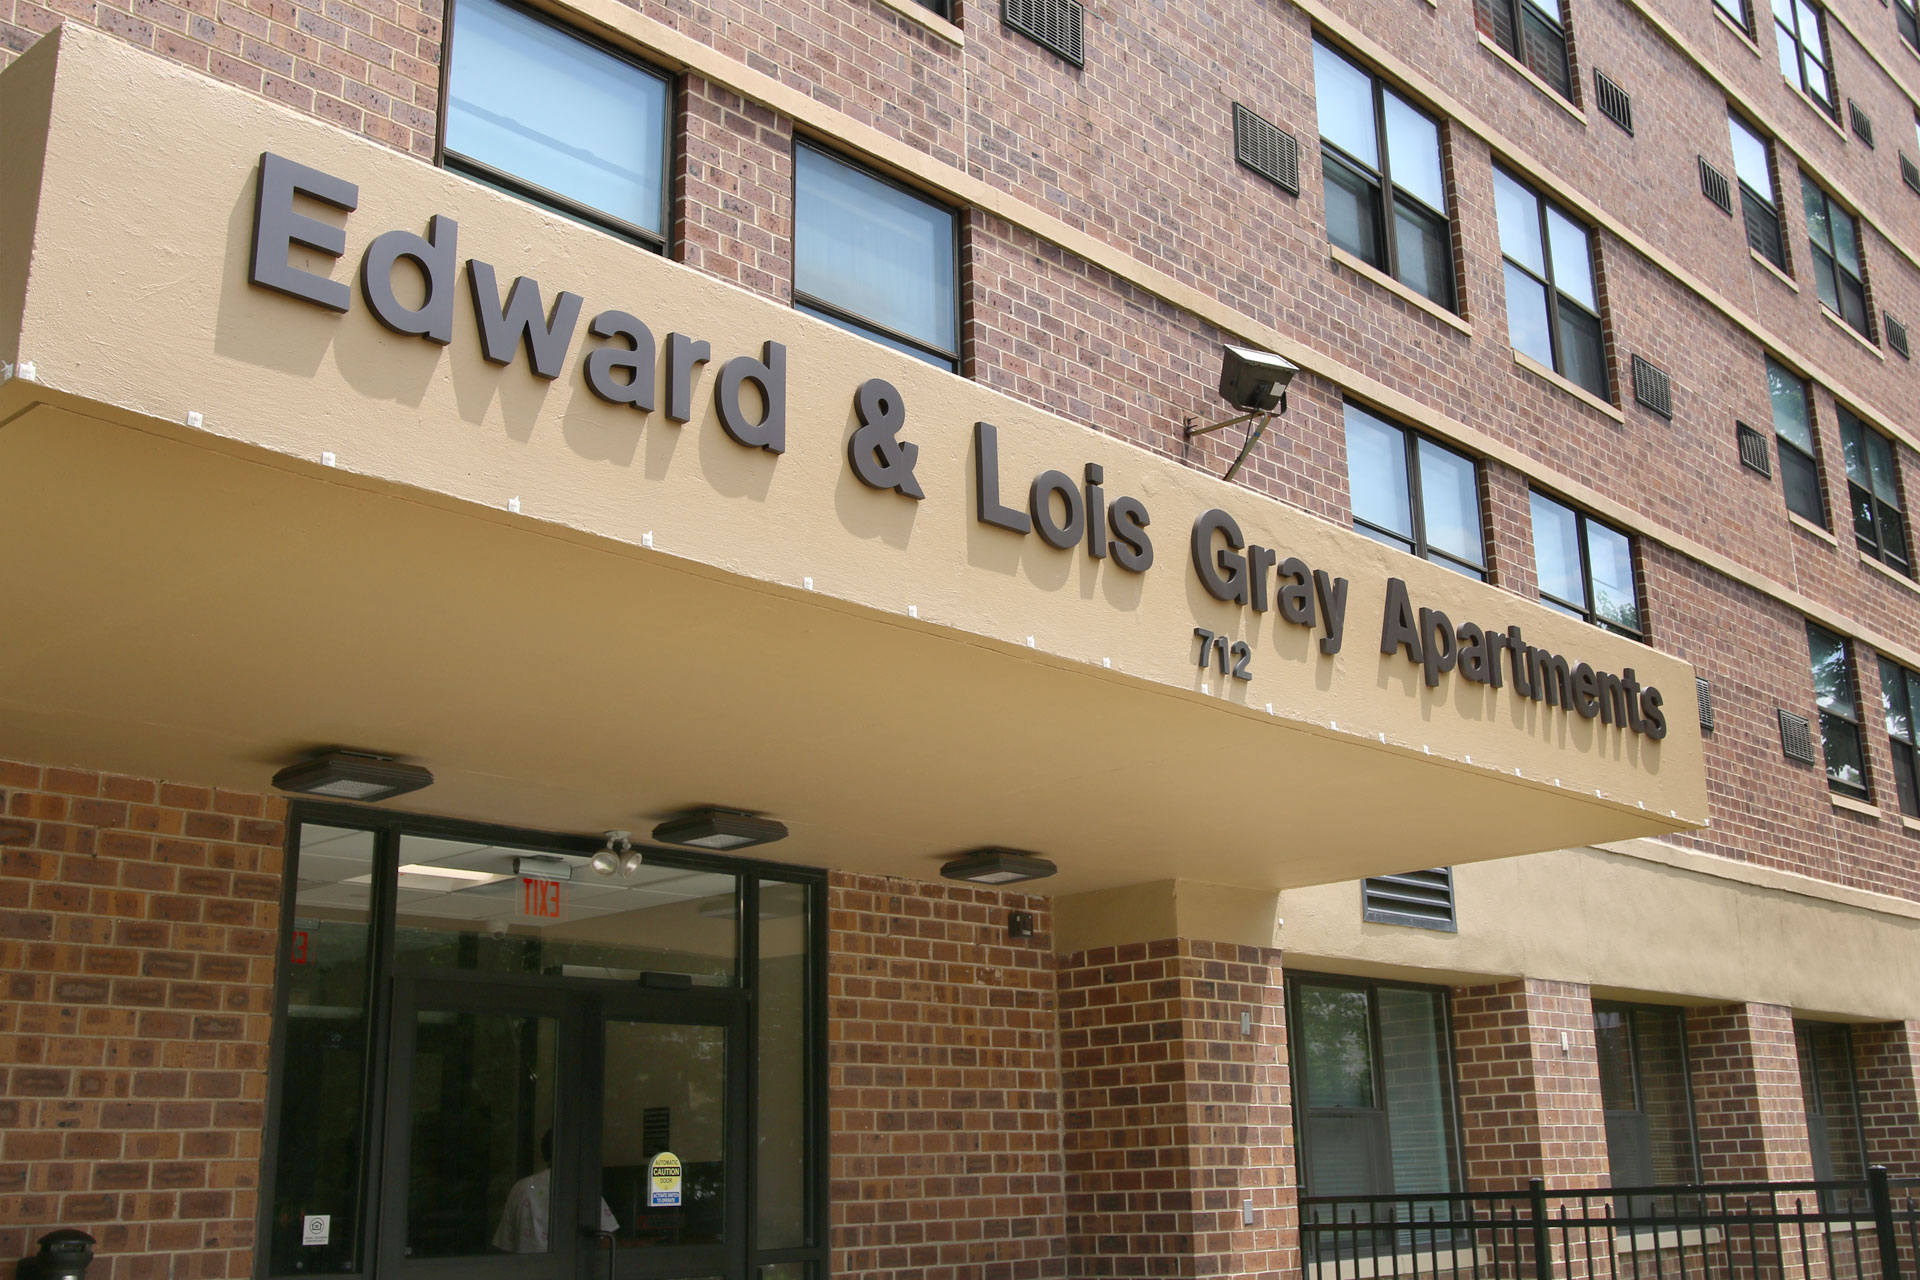 EDWARD AND LOIS GRAY APARTMENTS